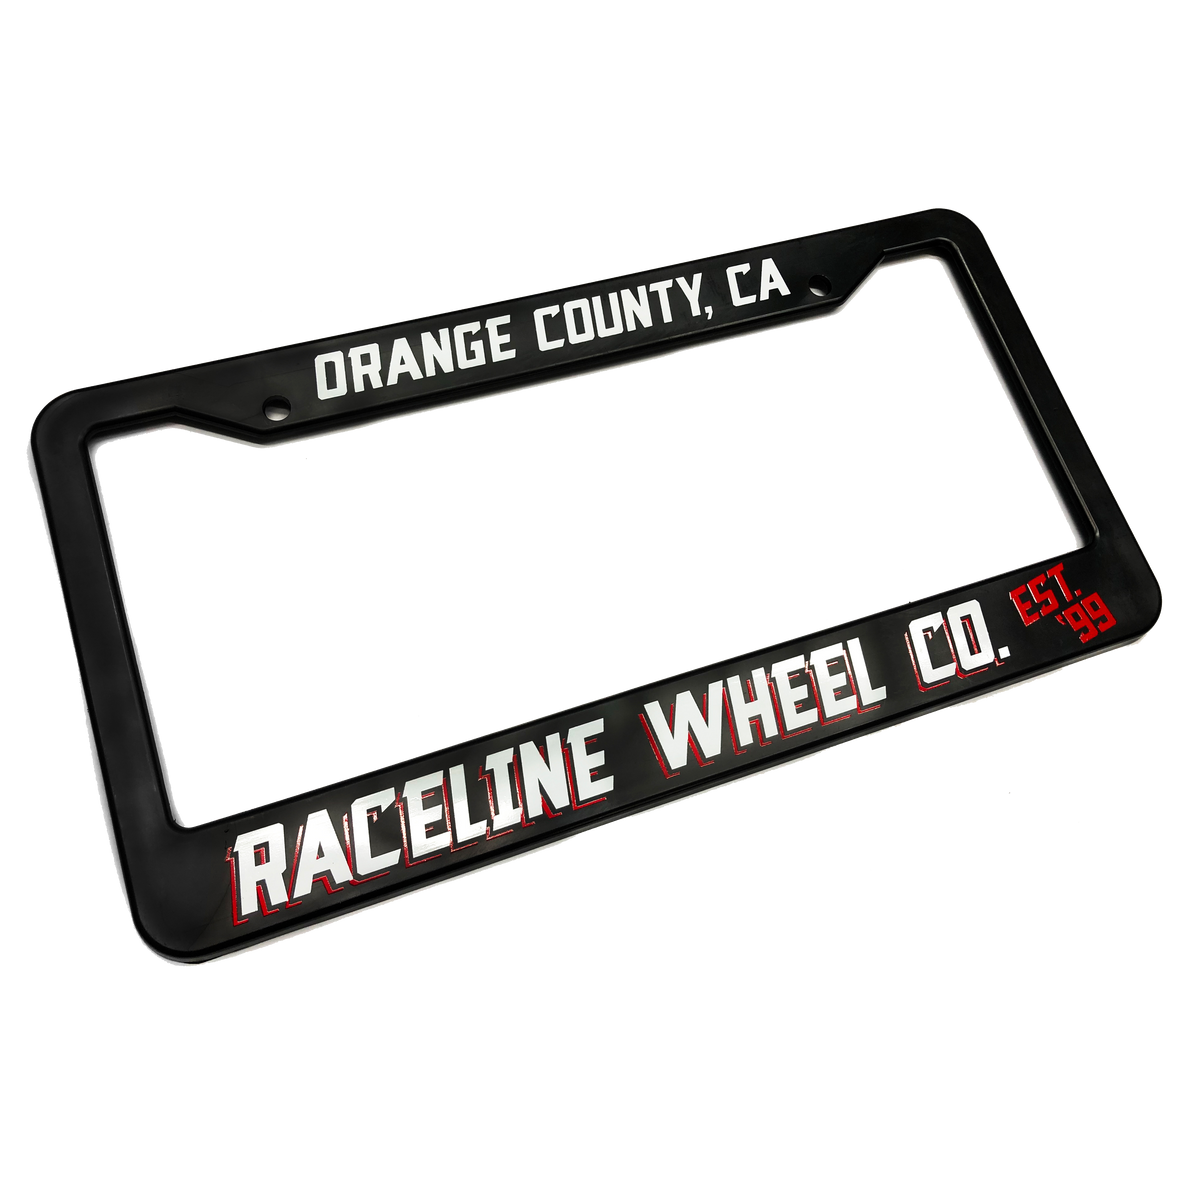 Raceline License Plate Cover